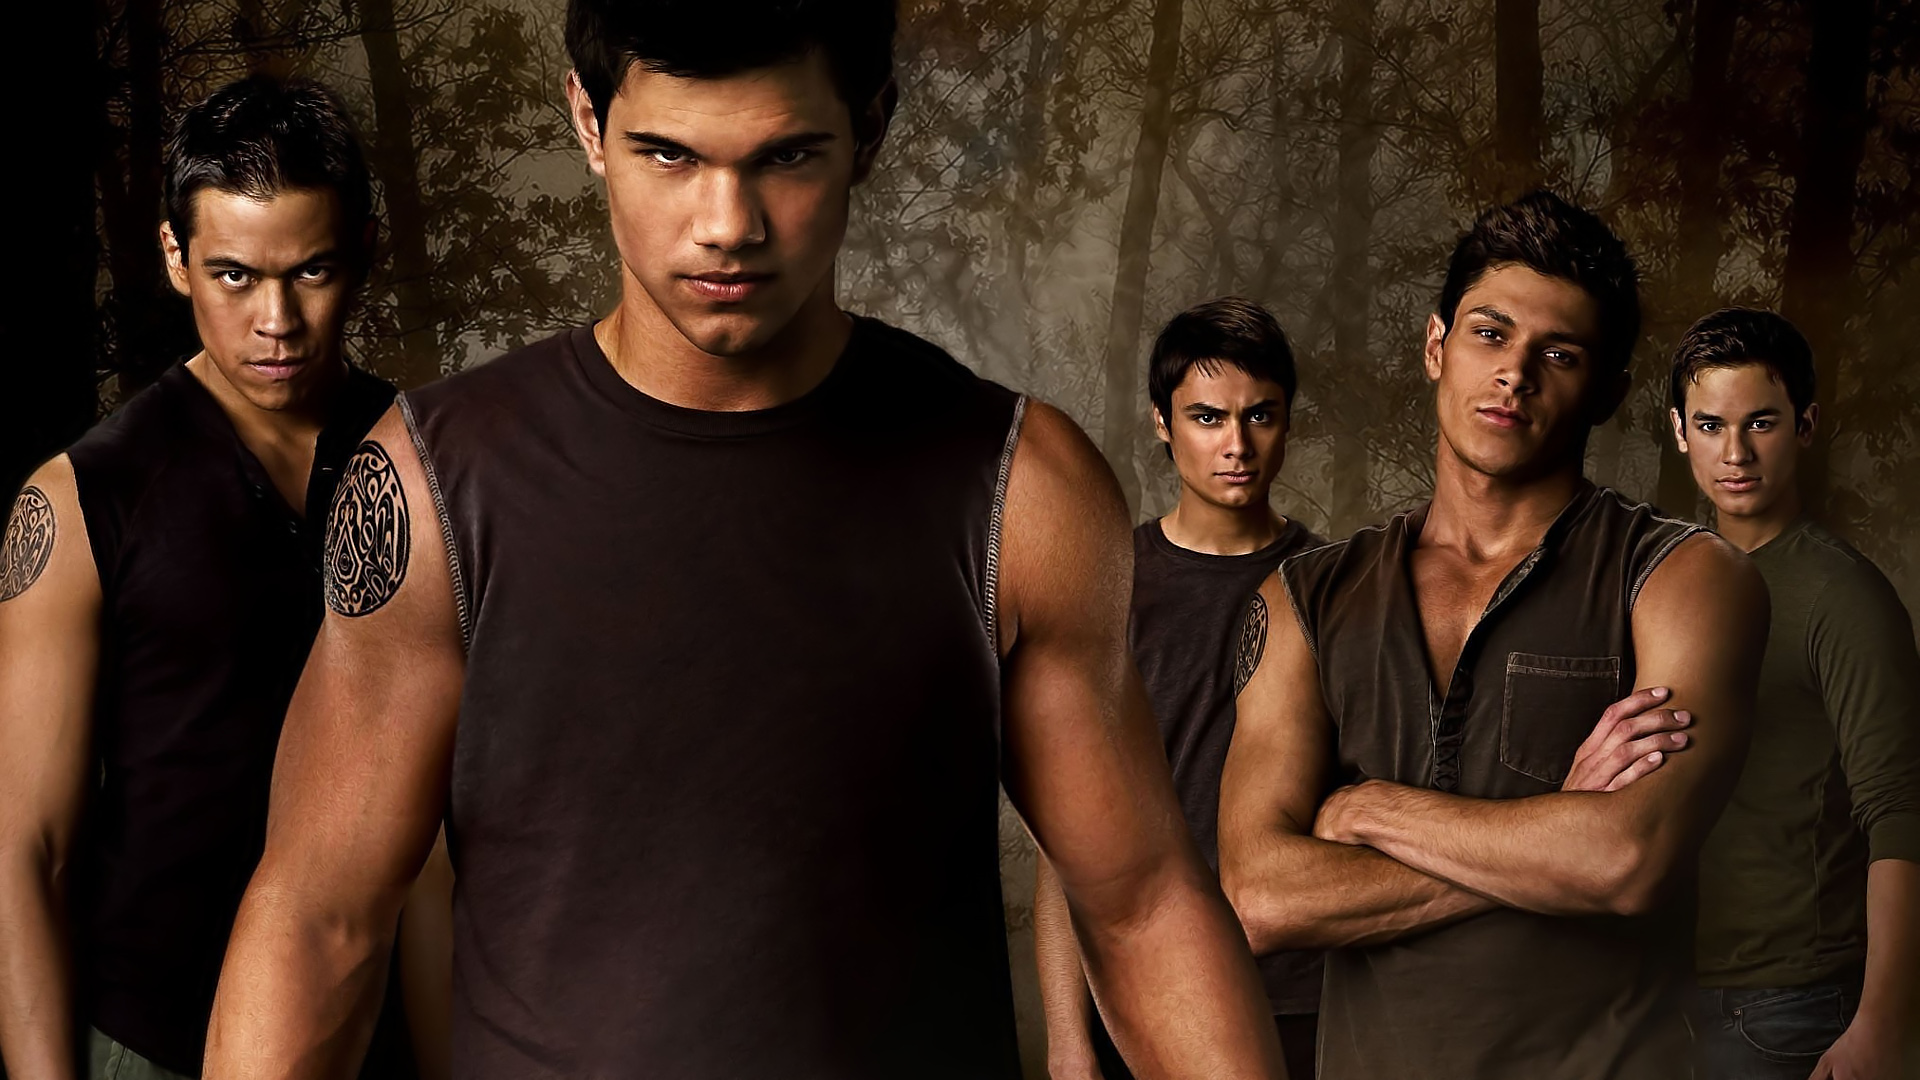 Movie The Twilight Saga: New Moon HD Wallpaper | Background Image